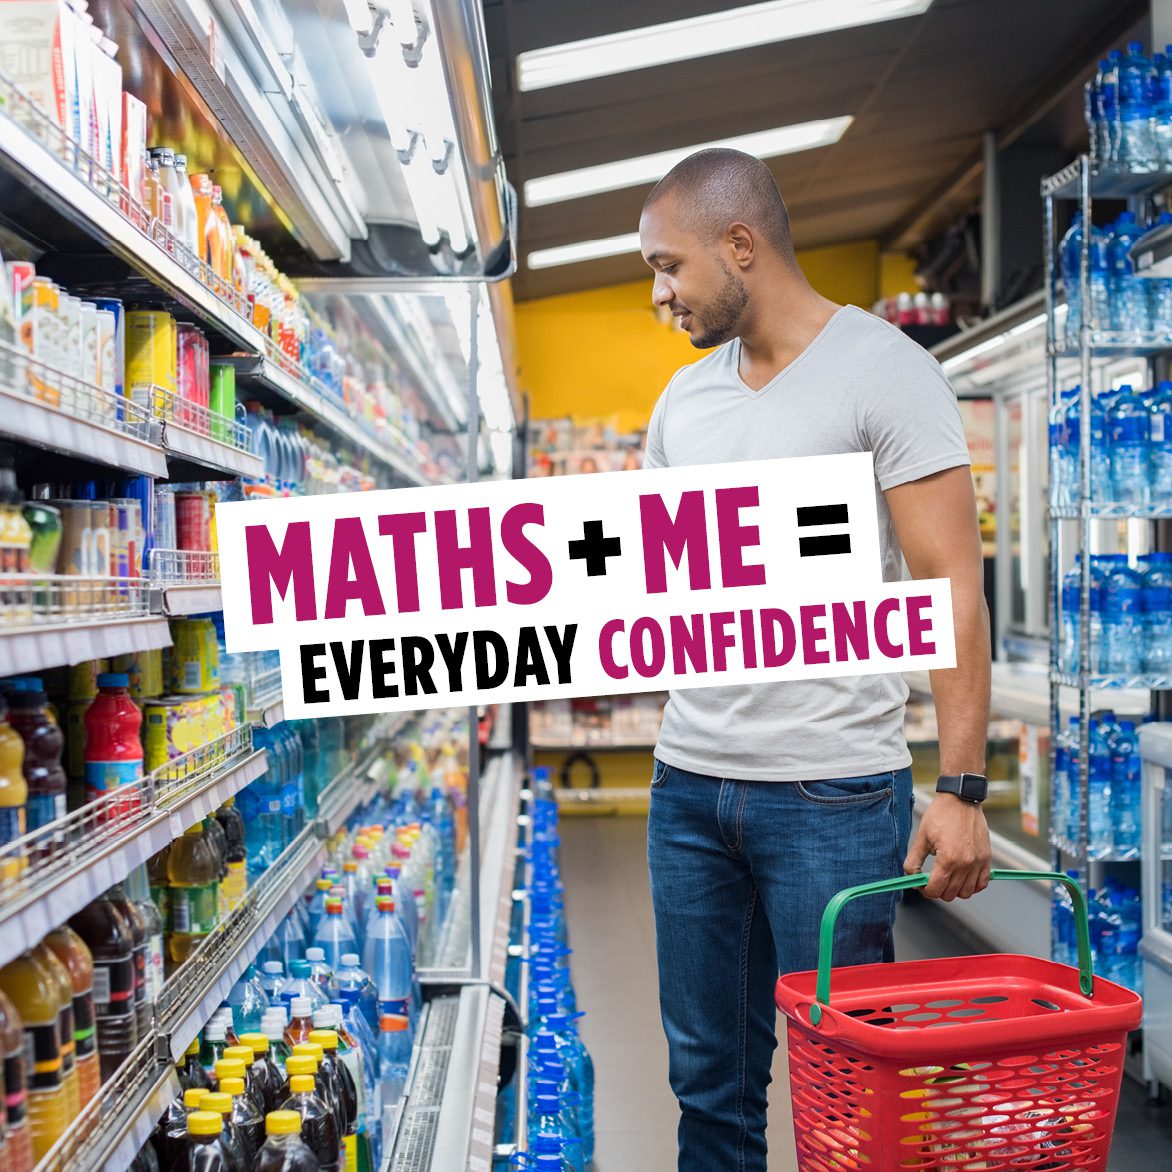 Maths + Me. Everyday confidence.